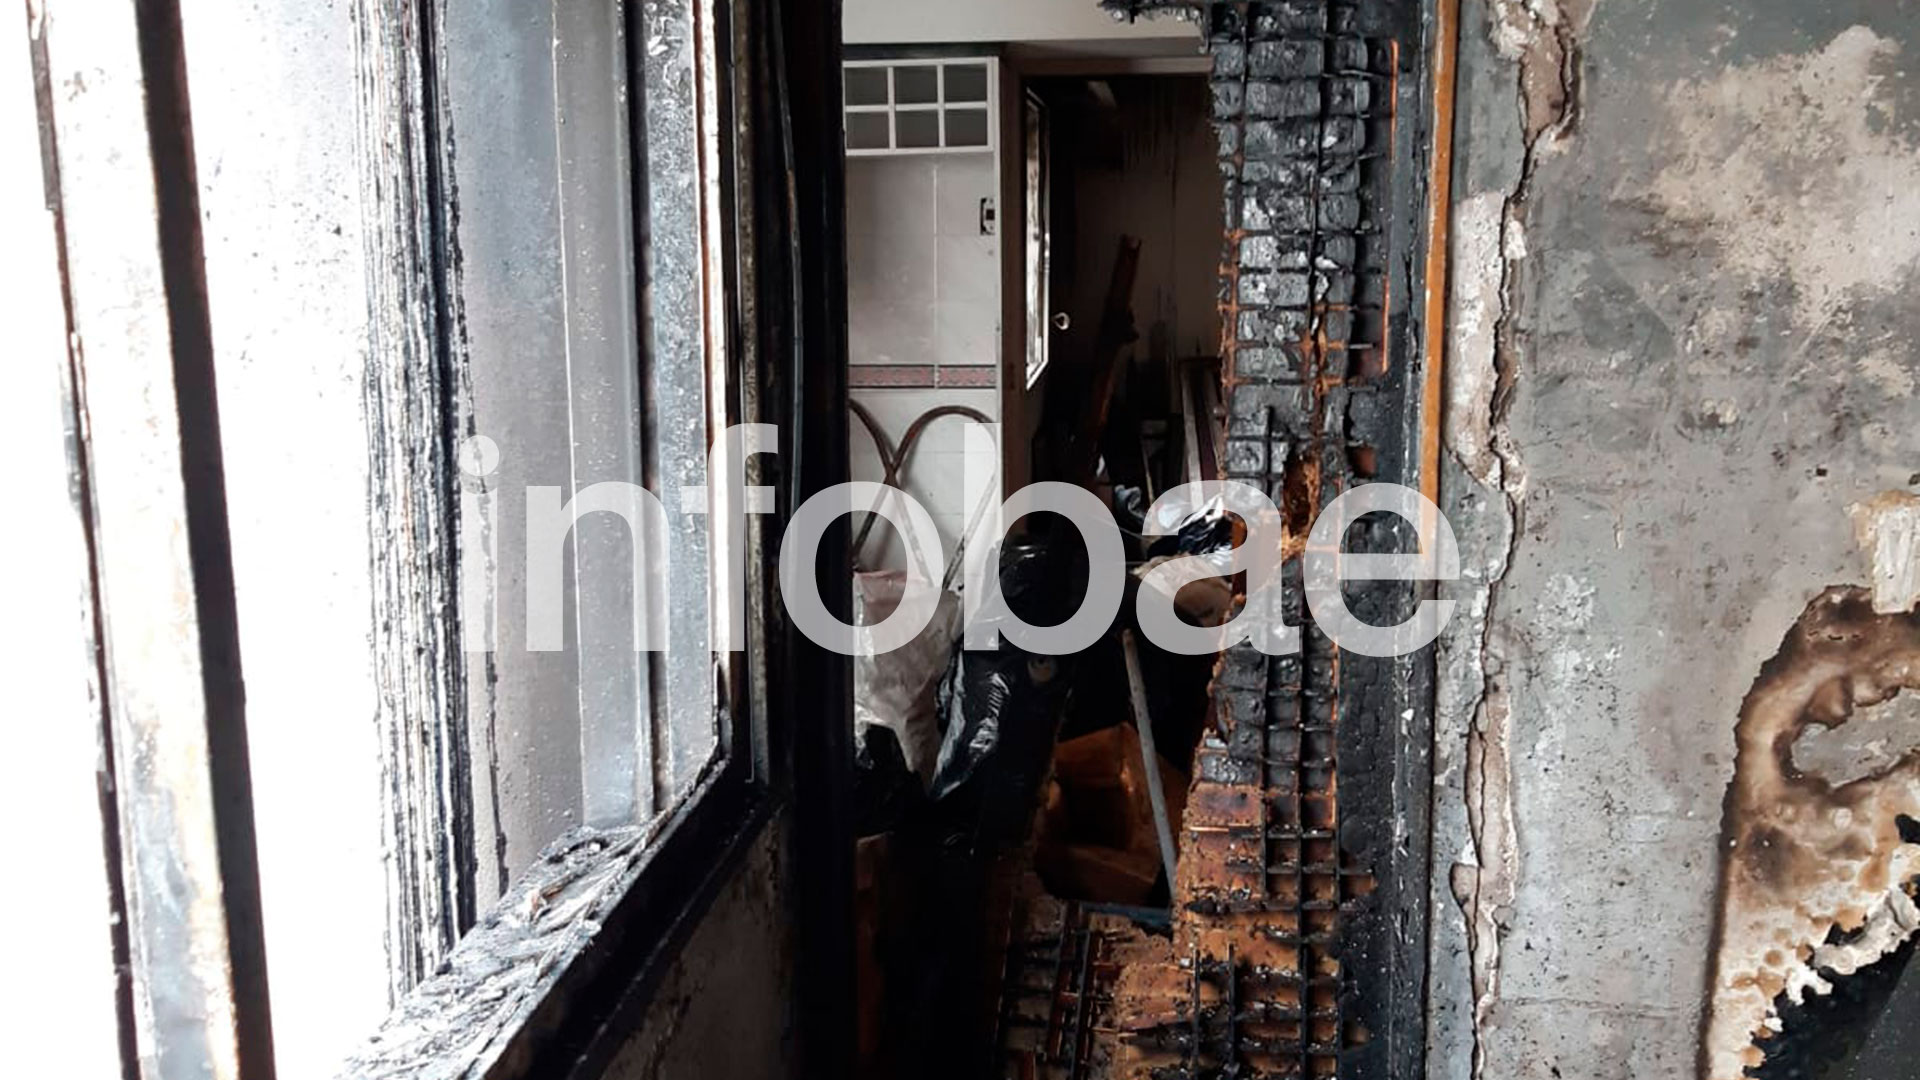 El departamento incendiado era el hogar de la familia Jabbaz (Infobae)

